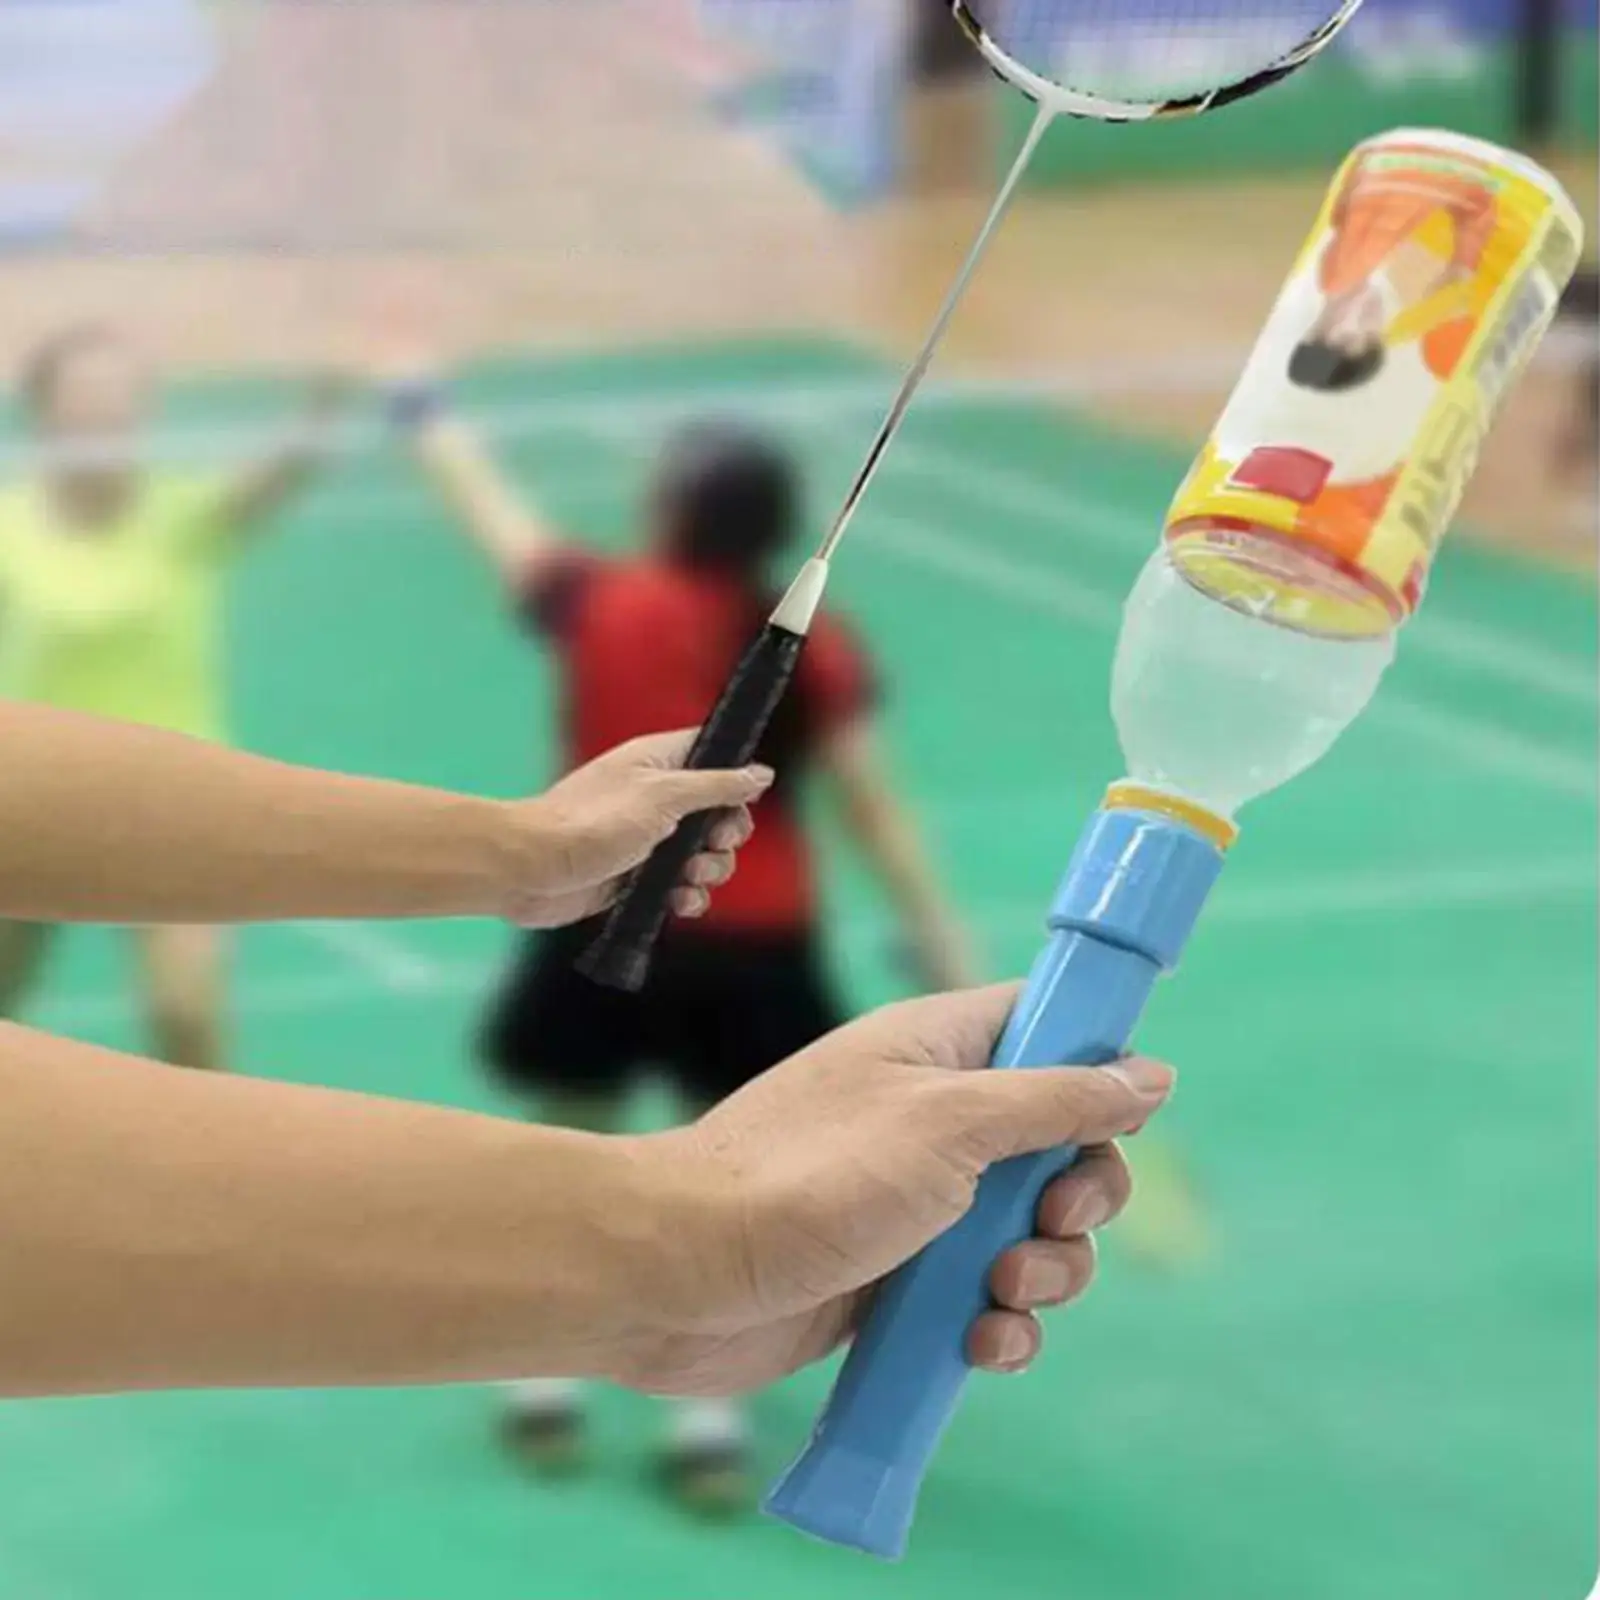 Badminton Power Enhance Grip Wrist Force Supplies Equipment Sport Accessories for Backyard Indoor Exercise Athletes